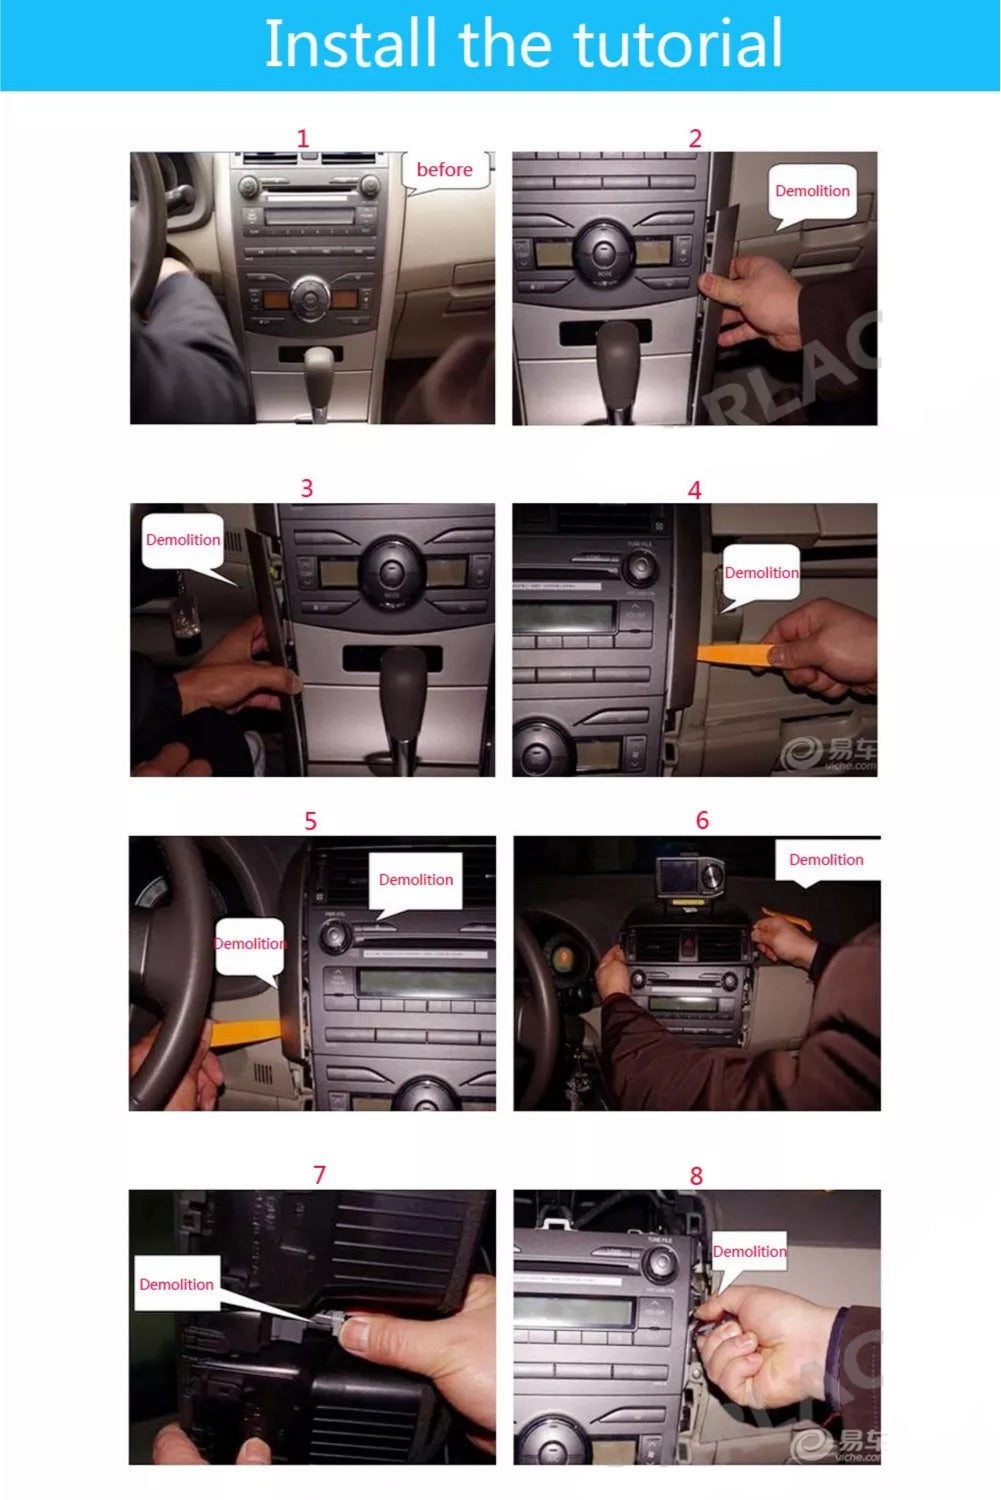 Android 10.1 Car Radio Multimedia Player Reverse Camera Suit For Toyota Corolla E140/ E150 2006 - 2013